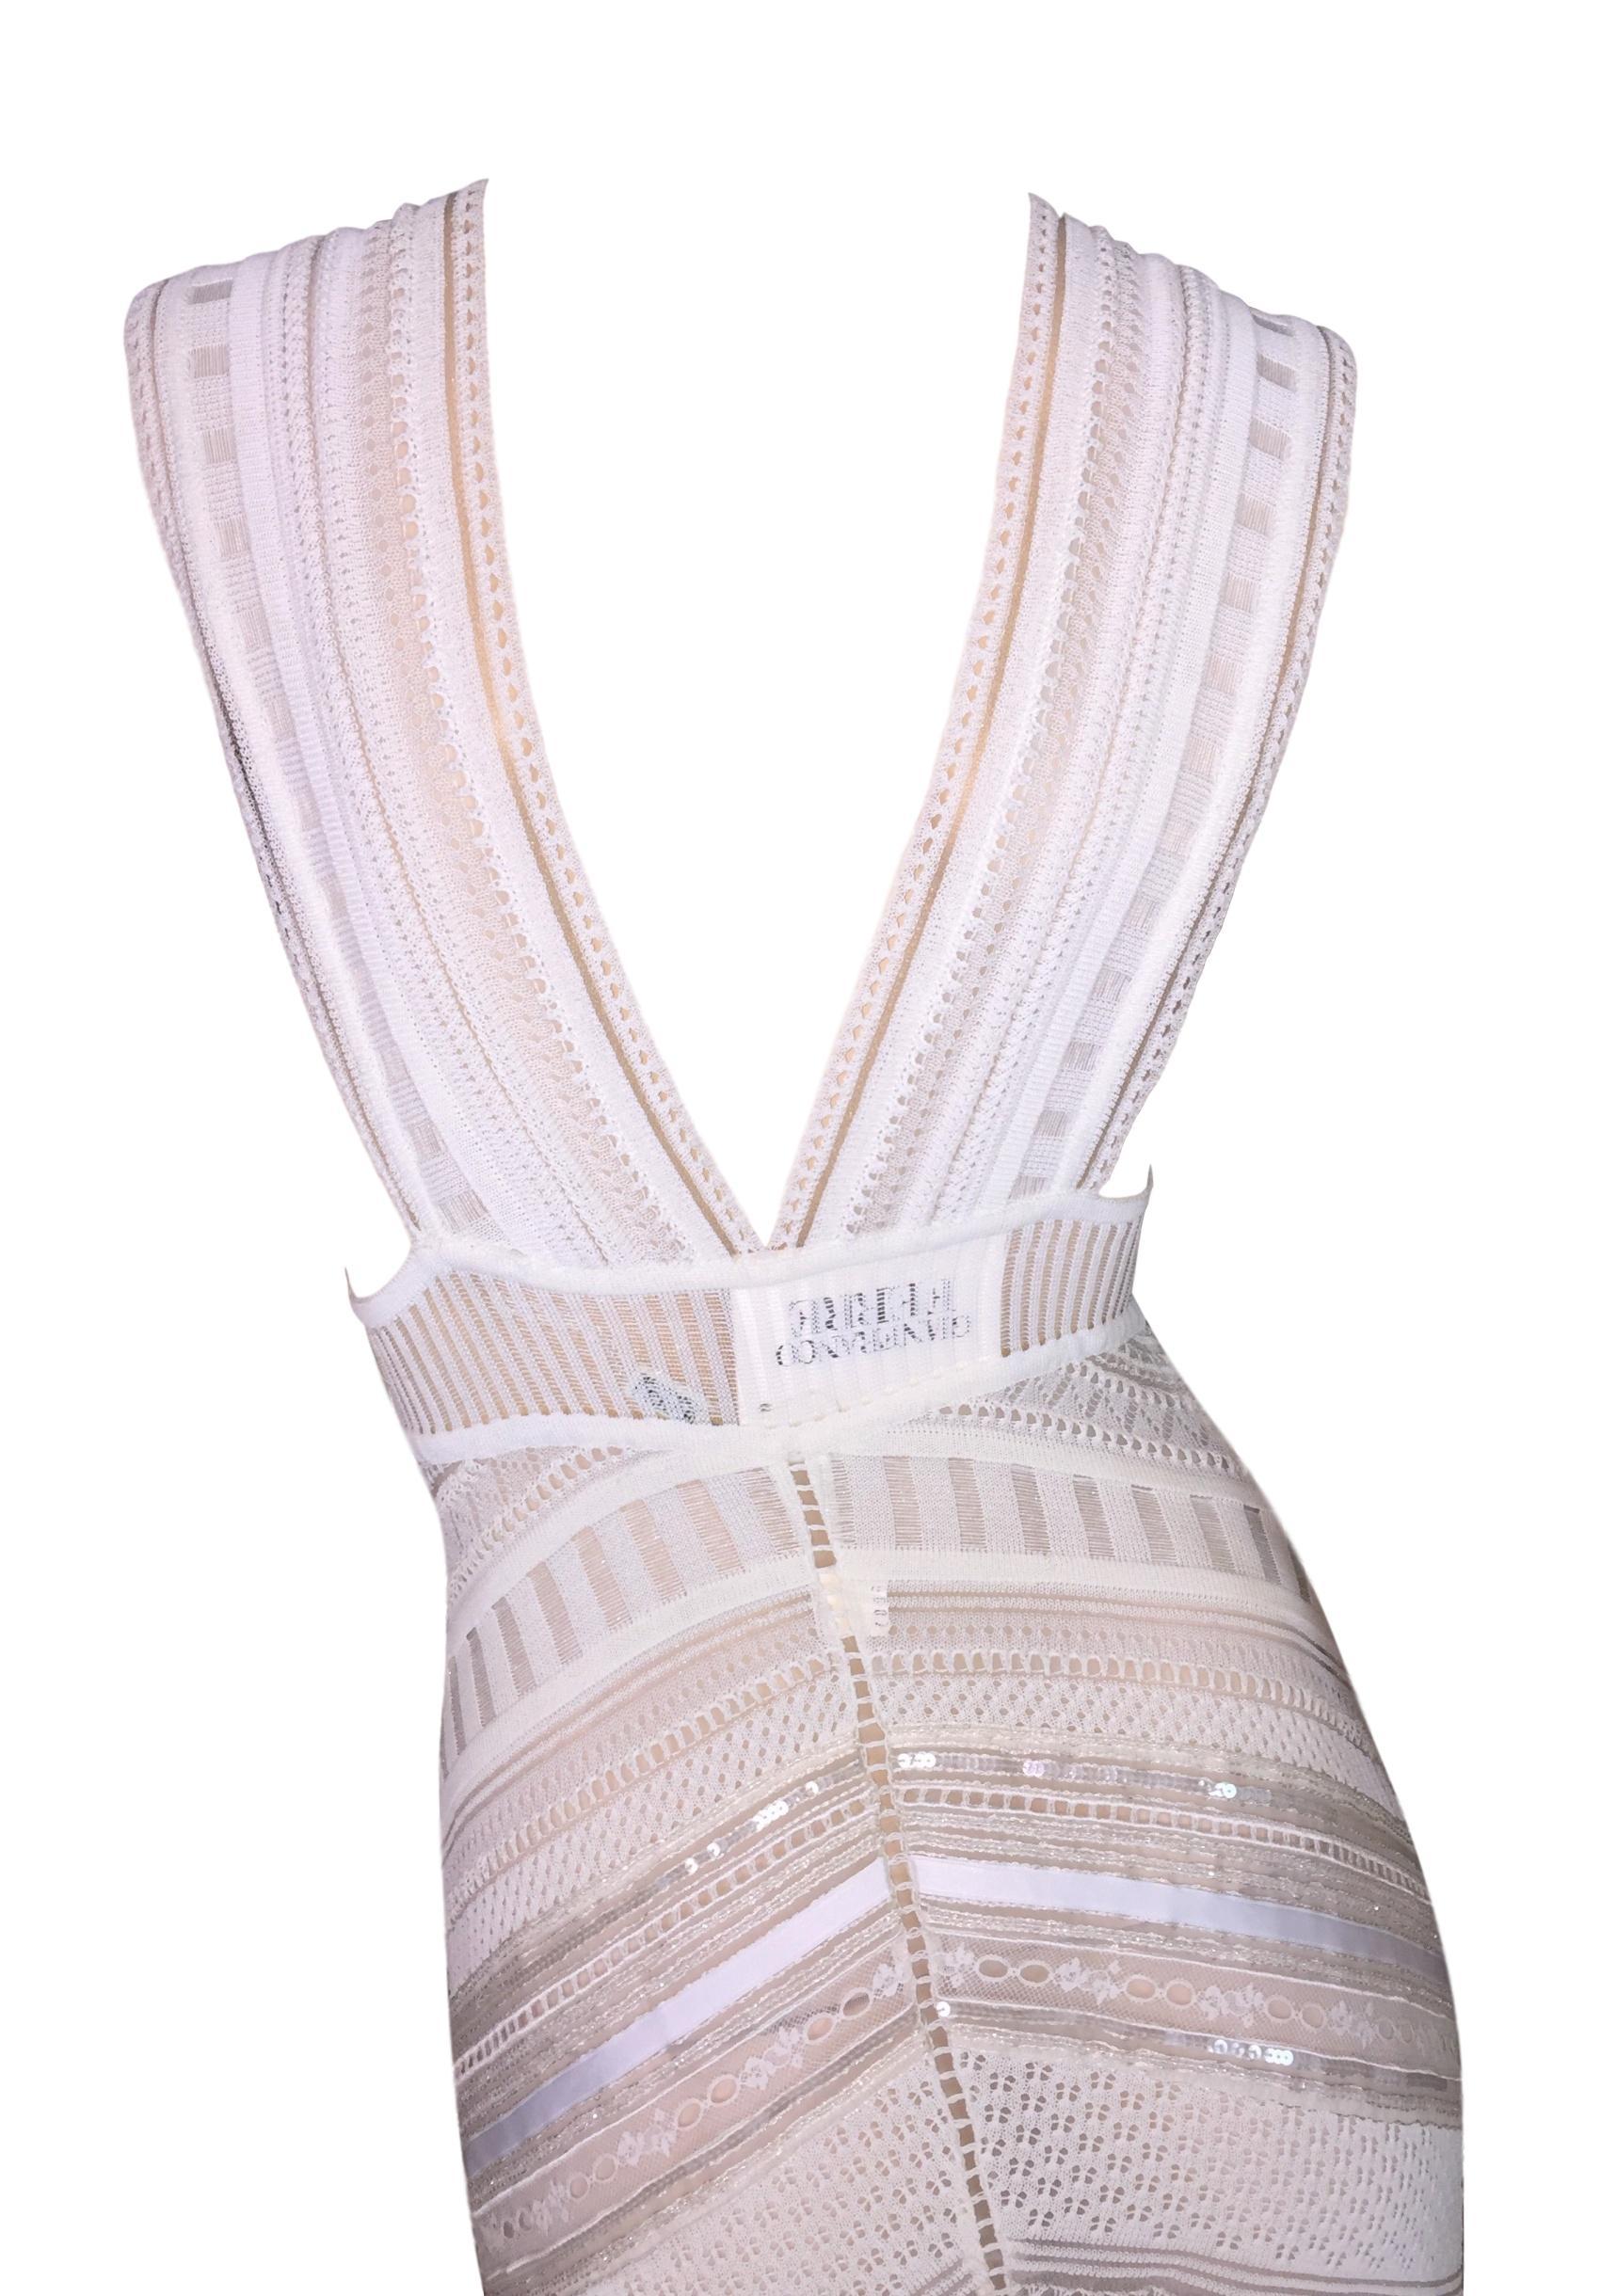 Women's Gianfranco Ferre Sheer Ivory Knit Embellished Bridal Mermaid Gown Dress S/S 1998